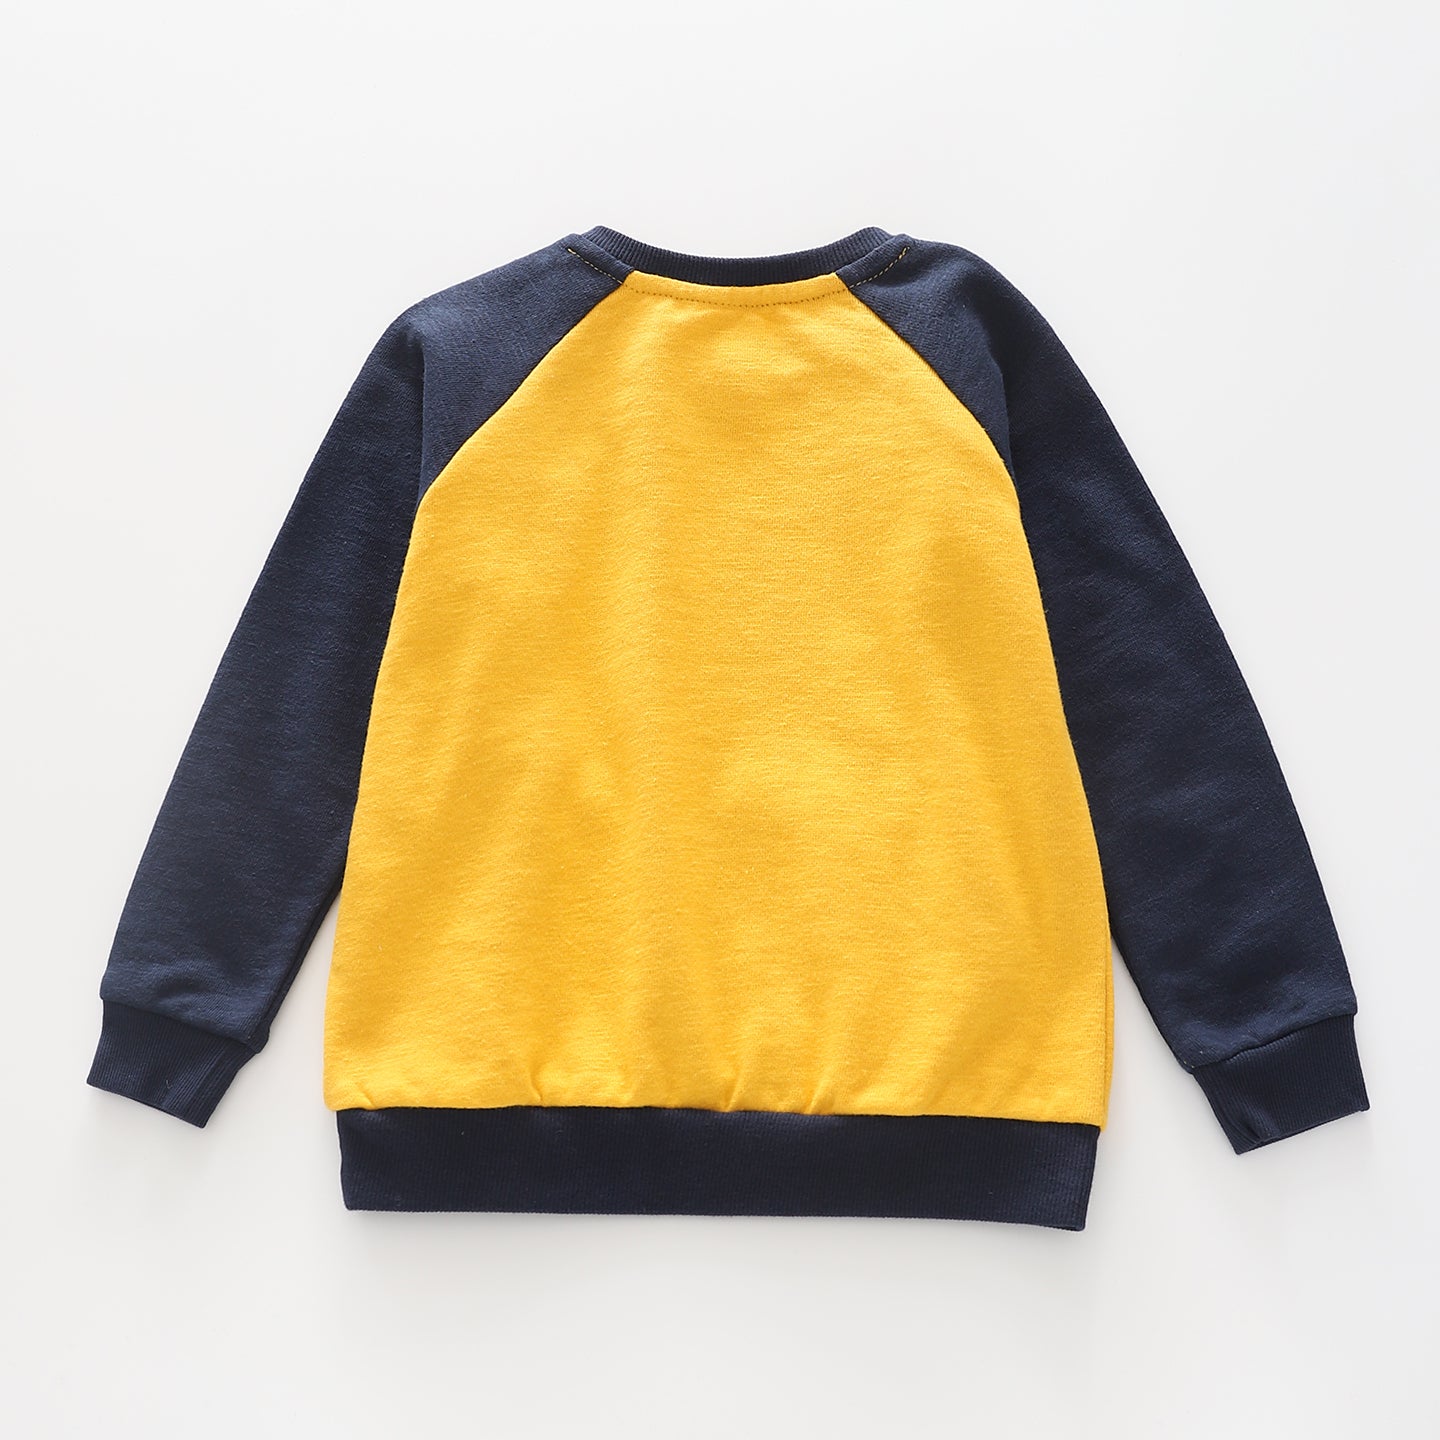 Croc Roadtrip Mustard Raglan Sweater Top - Toddler Boy